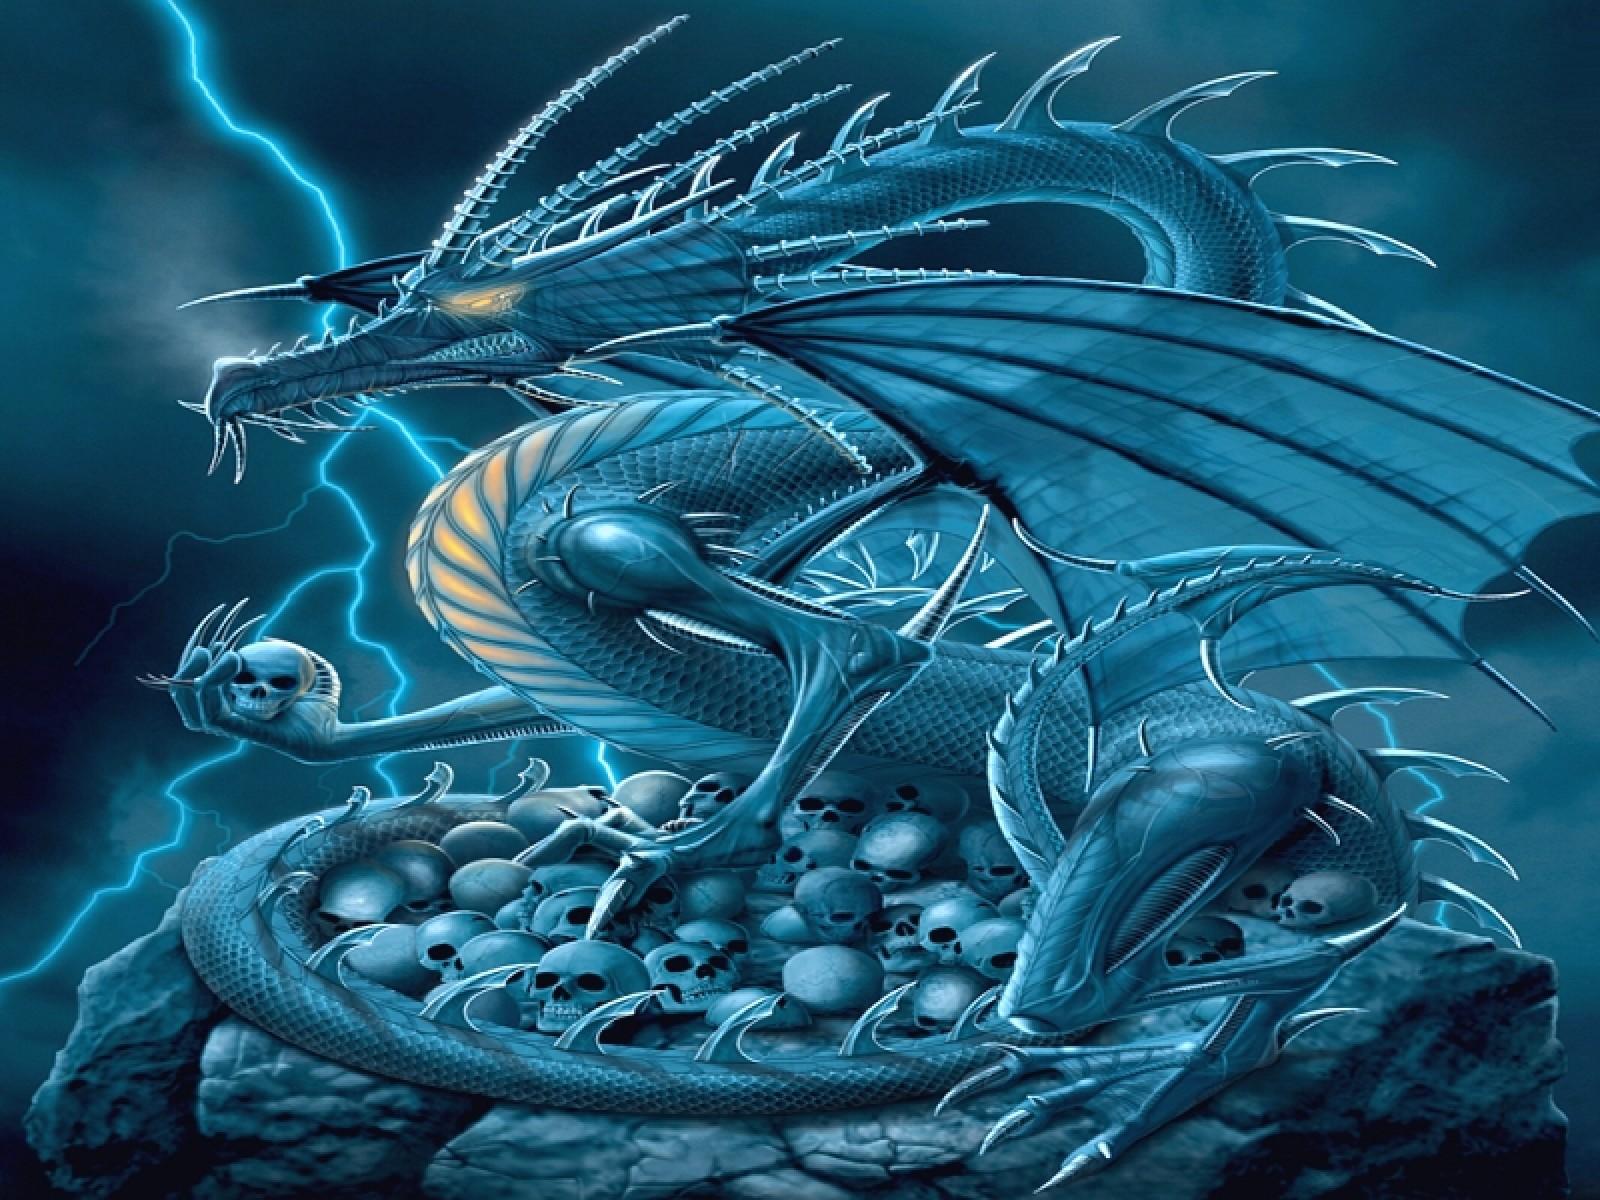 Cool Blue Dragon Wallpaper Animal Backgrounds | HD Wallpapers Range